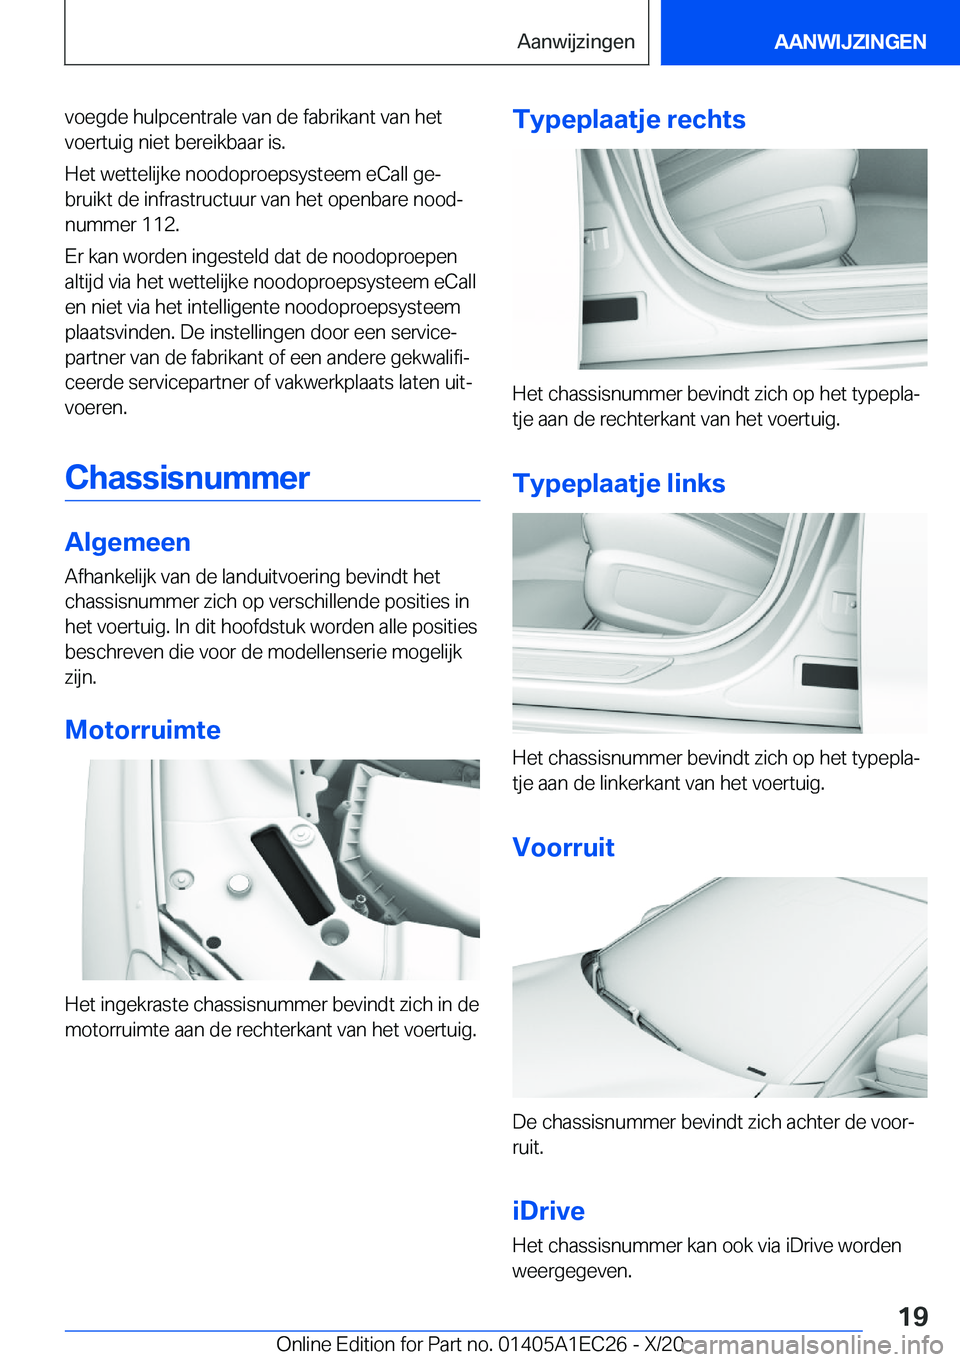 BMW 8 SERIES GRAN COUPE 2021  Instructieboekjes (in Dutch) �v�o�e�g�d�e��h�u�l�p�c�e�n�t�r�a�l�e��v�a�n��d�e��f�a�b�r�i�k�a�n�t��v�a�n��h�e�t
�v�o�e�r�t�u�i�g��n�i�e�t��b�e�r�e�i�k�b�a�a�r��i�s�.
�H�e�t��w�e�t�t�e�l�i�j�k�e��n�o�o�d�o�p�r�o�e�p�s�y